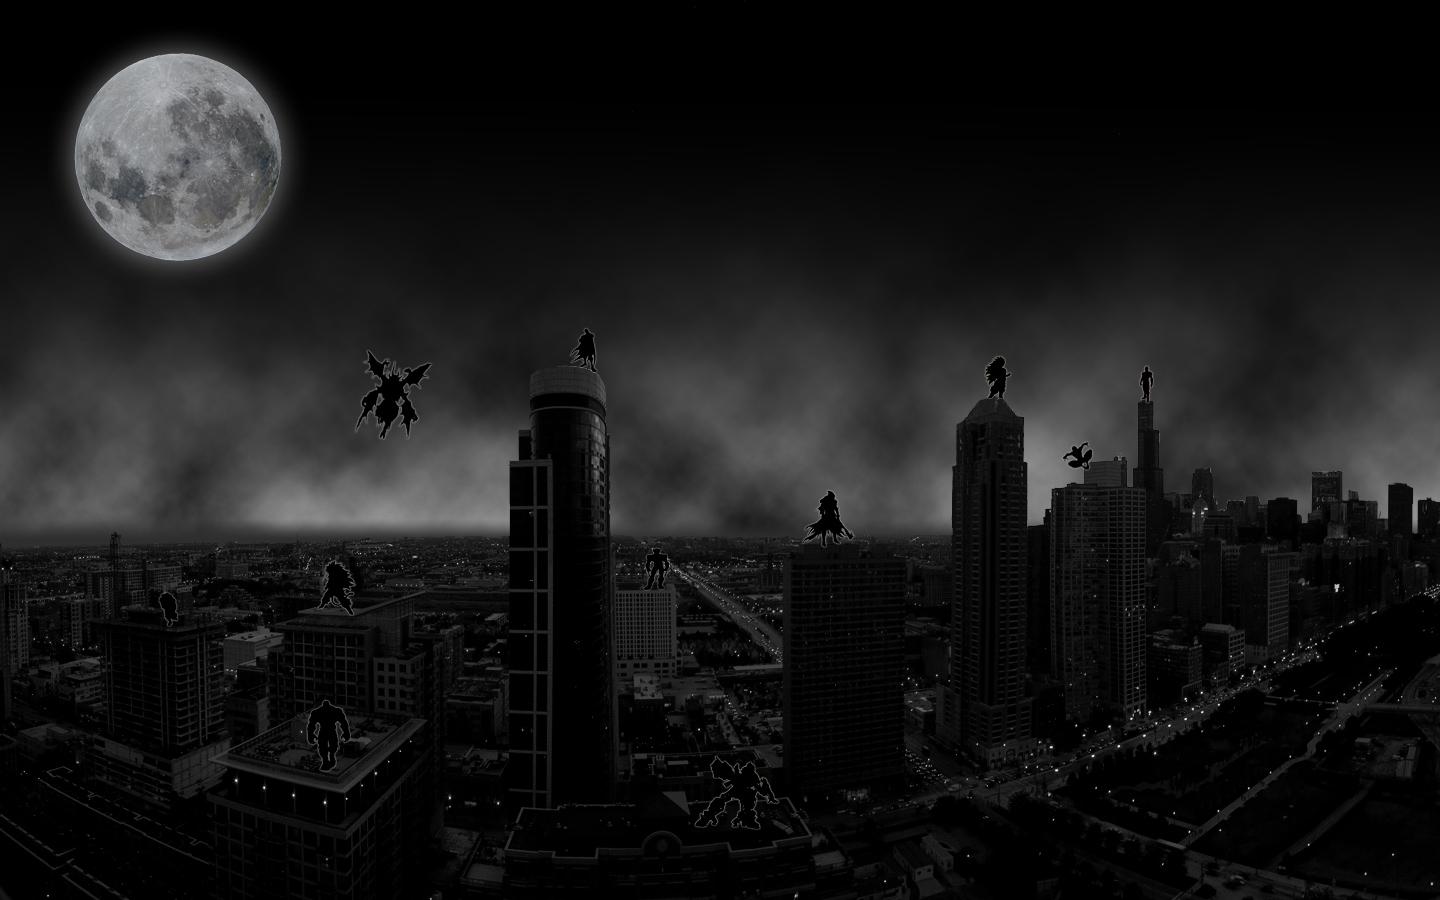 Dark Monsters Night in the City wallpaper from Dark wallpaper